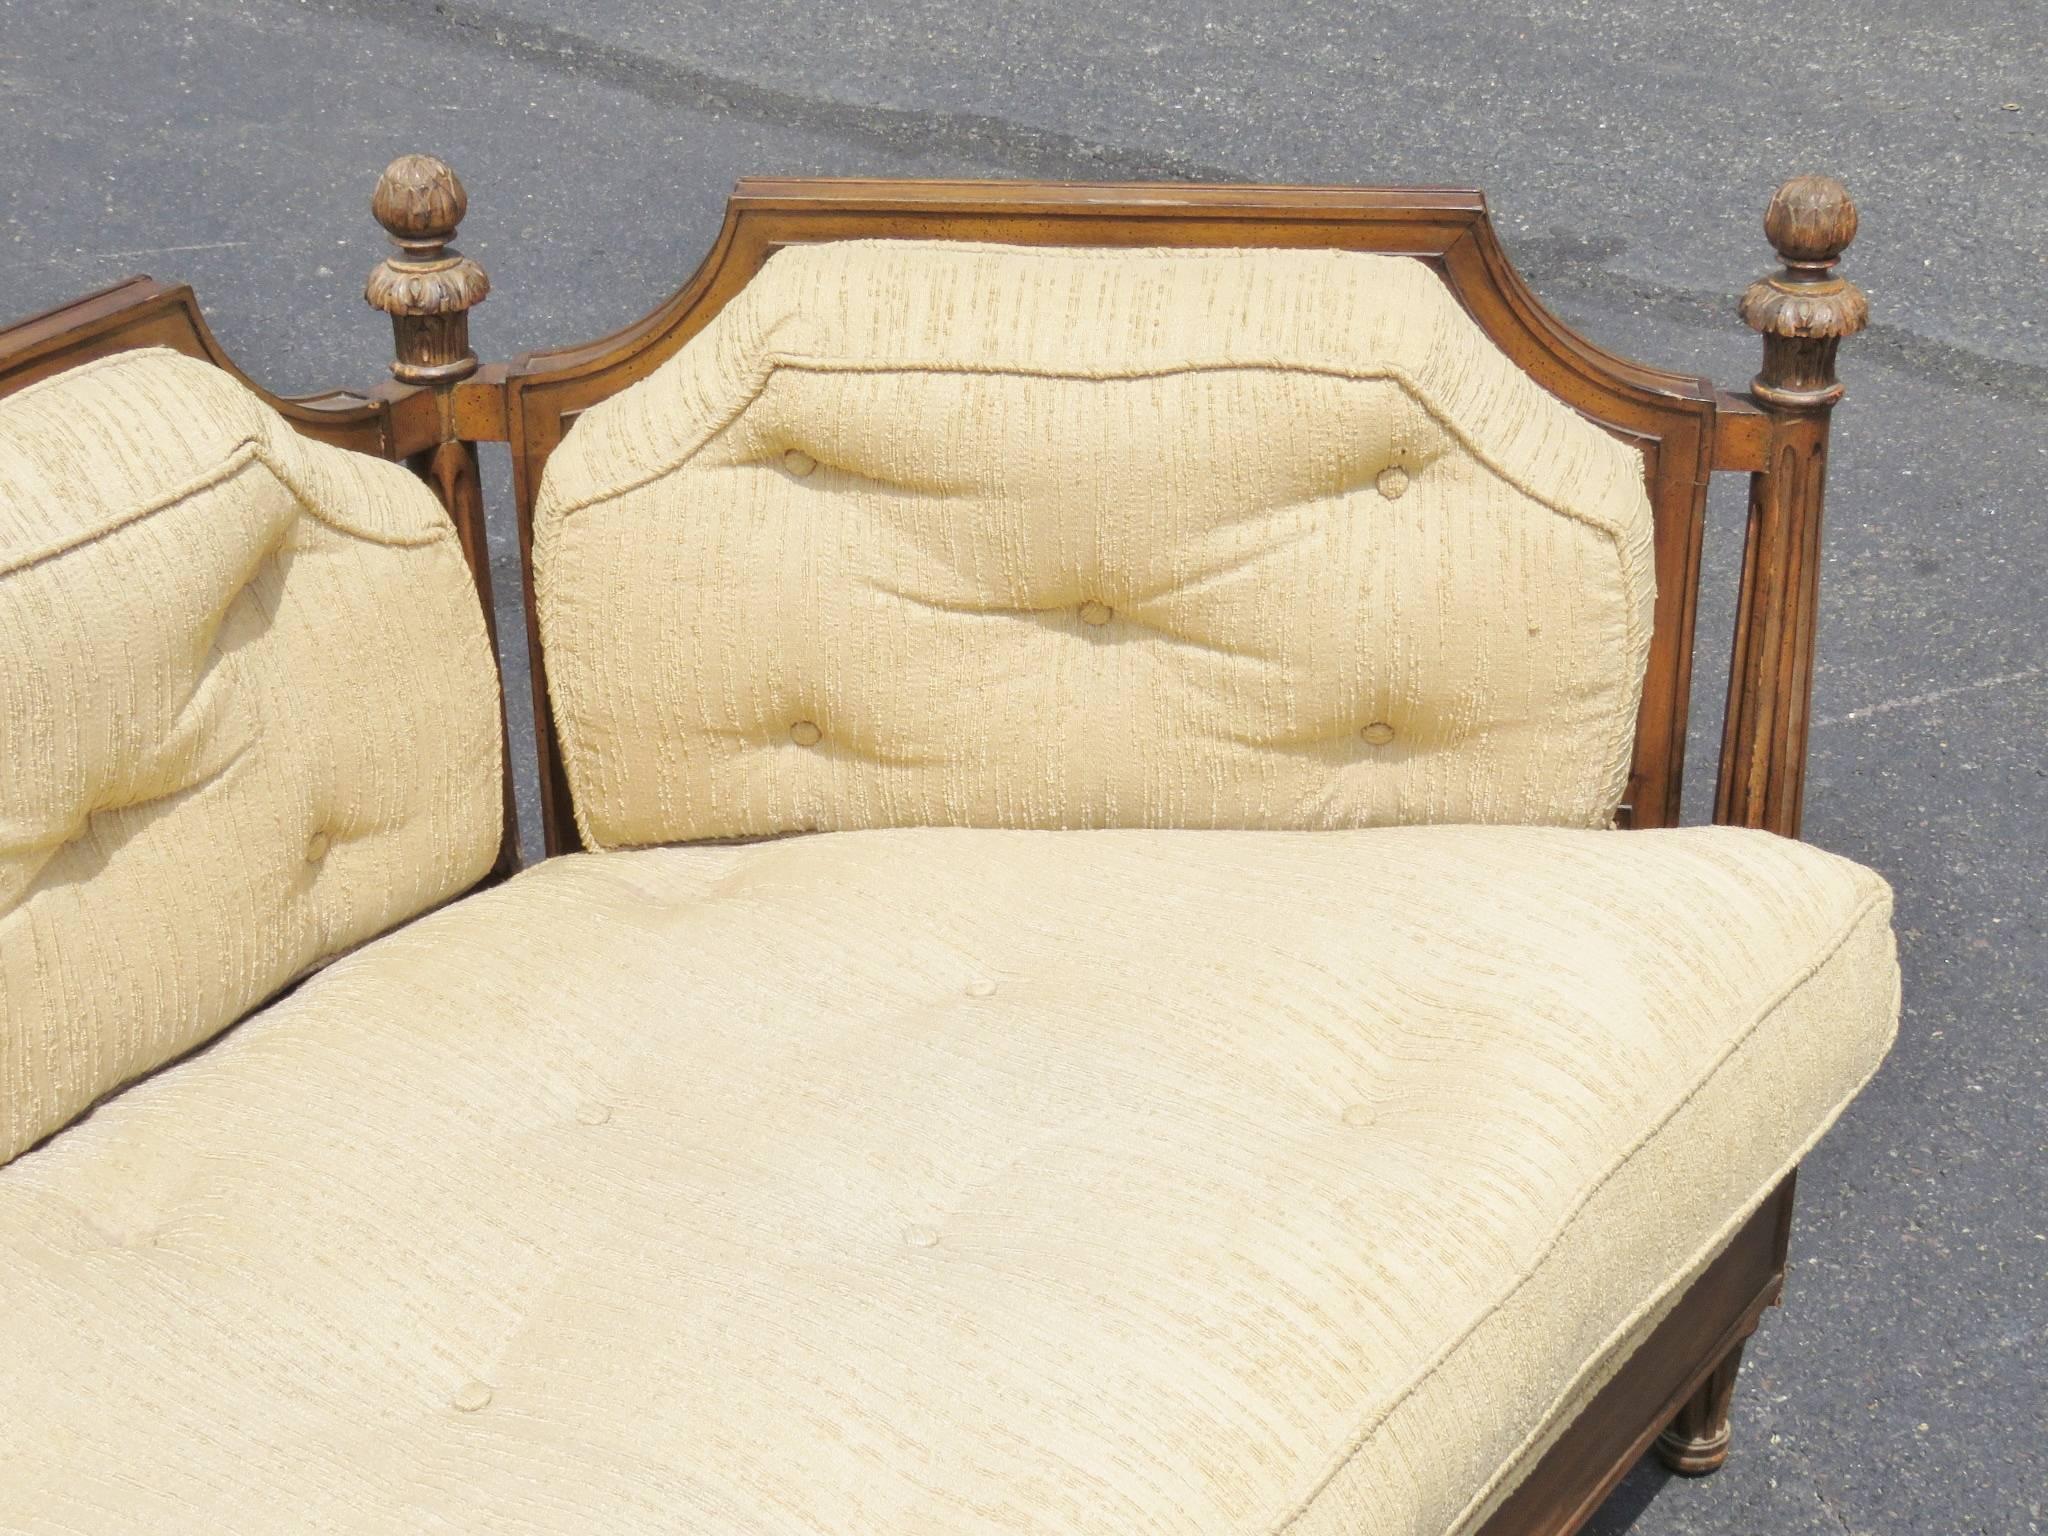 Carved walnut frame. Cream tufted upholstery.